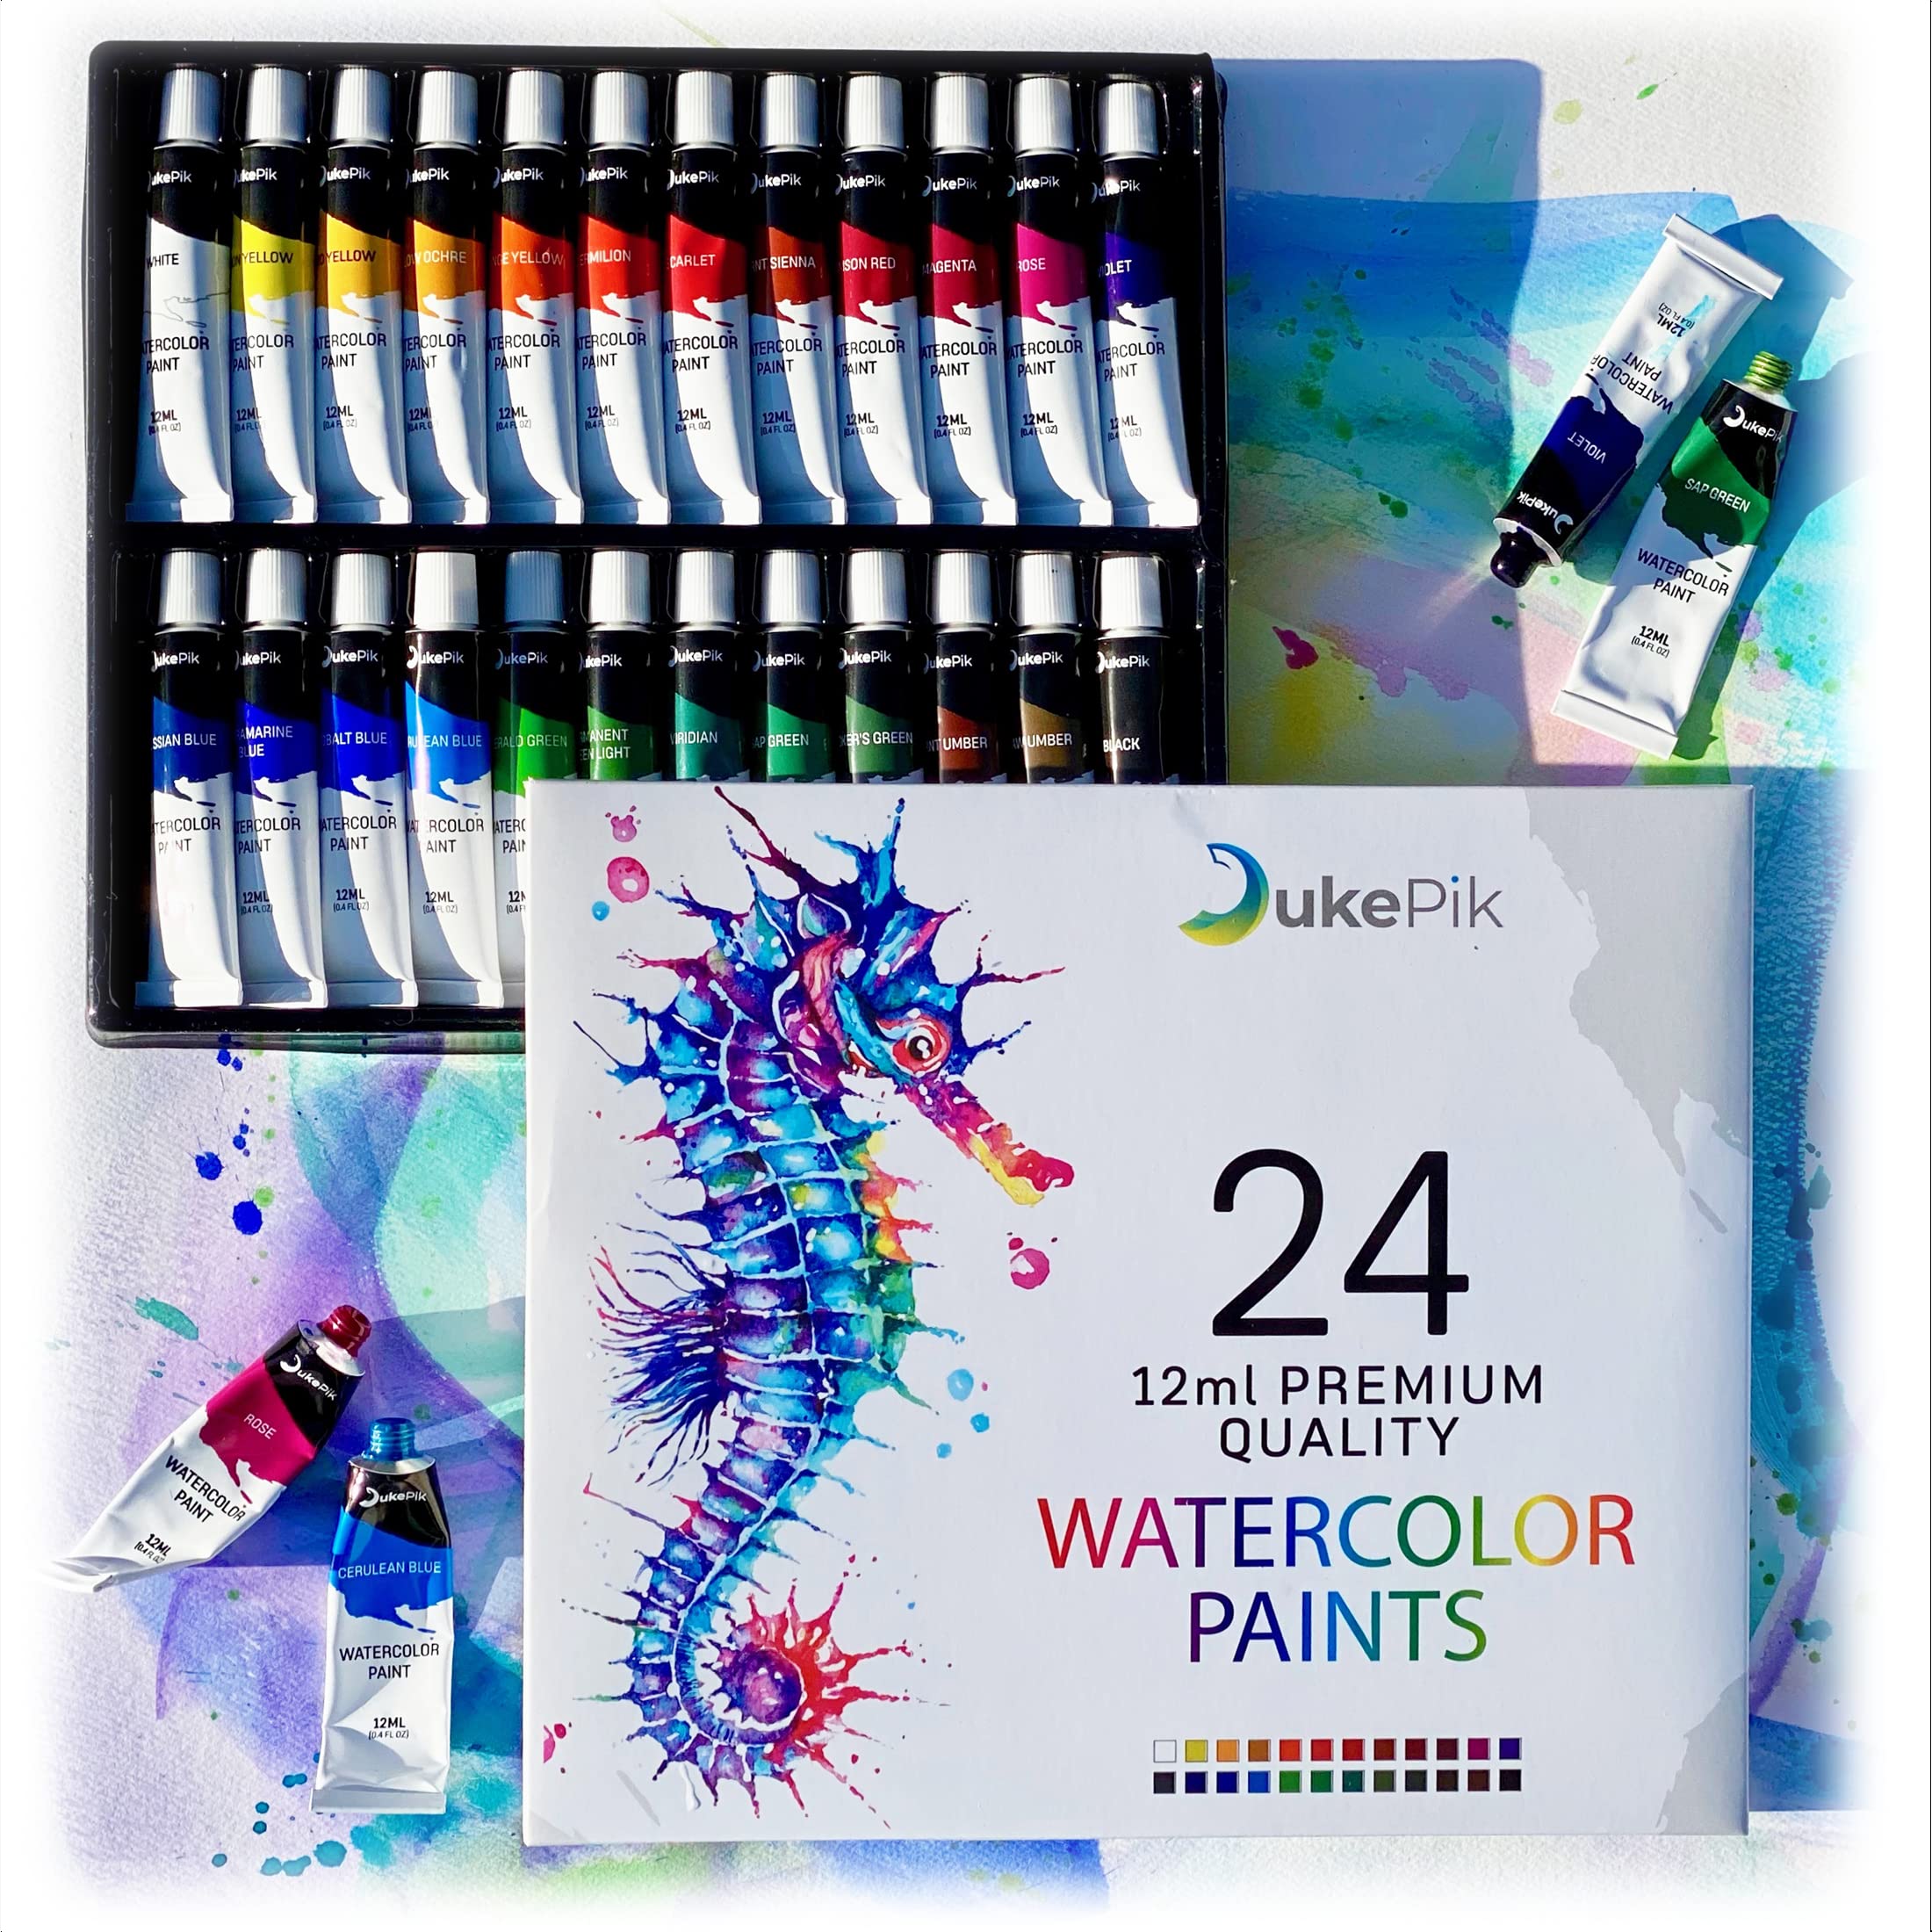 DukePik 24-Color Premium Watercolor Set - Vibrant, Artist-Grade Paints, Easy Blend, Non Toxic Water Colors, Perfect for Both Novice Children & Professional, Hobby Adult Painters